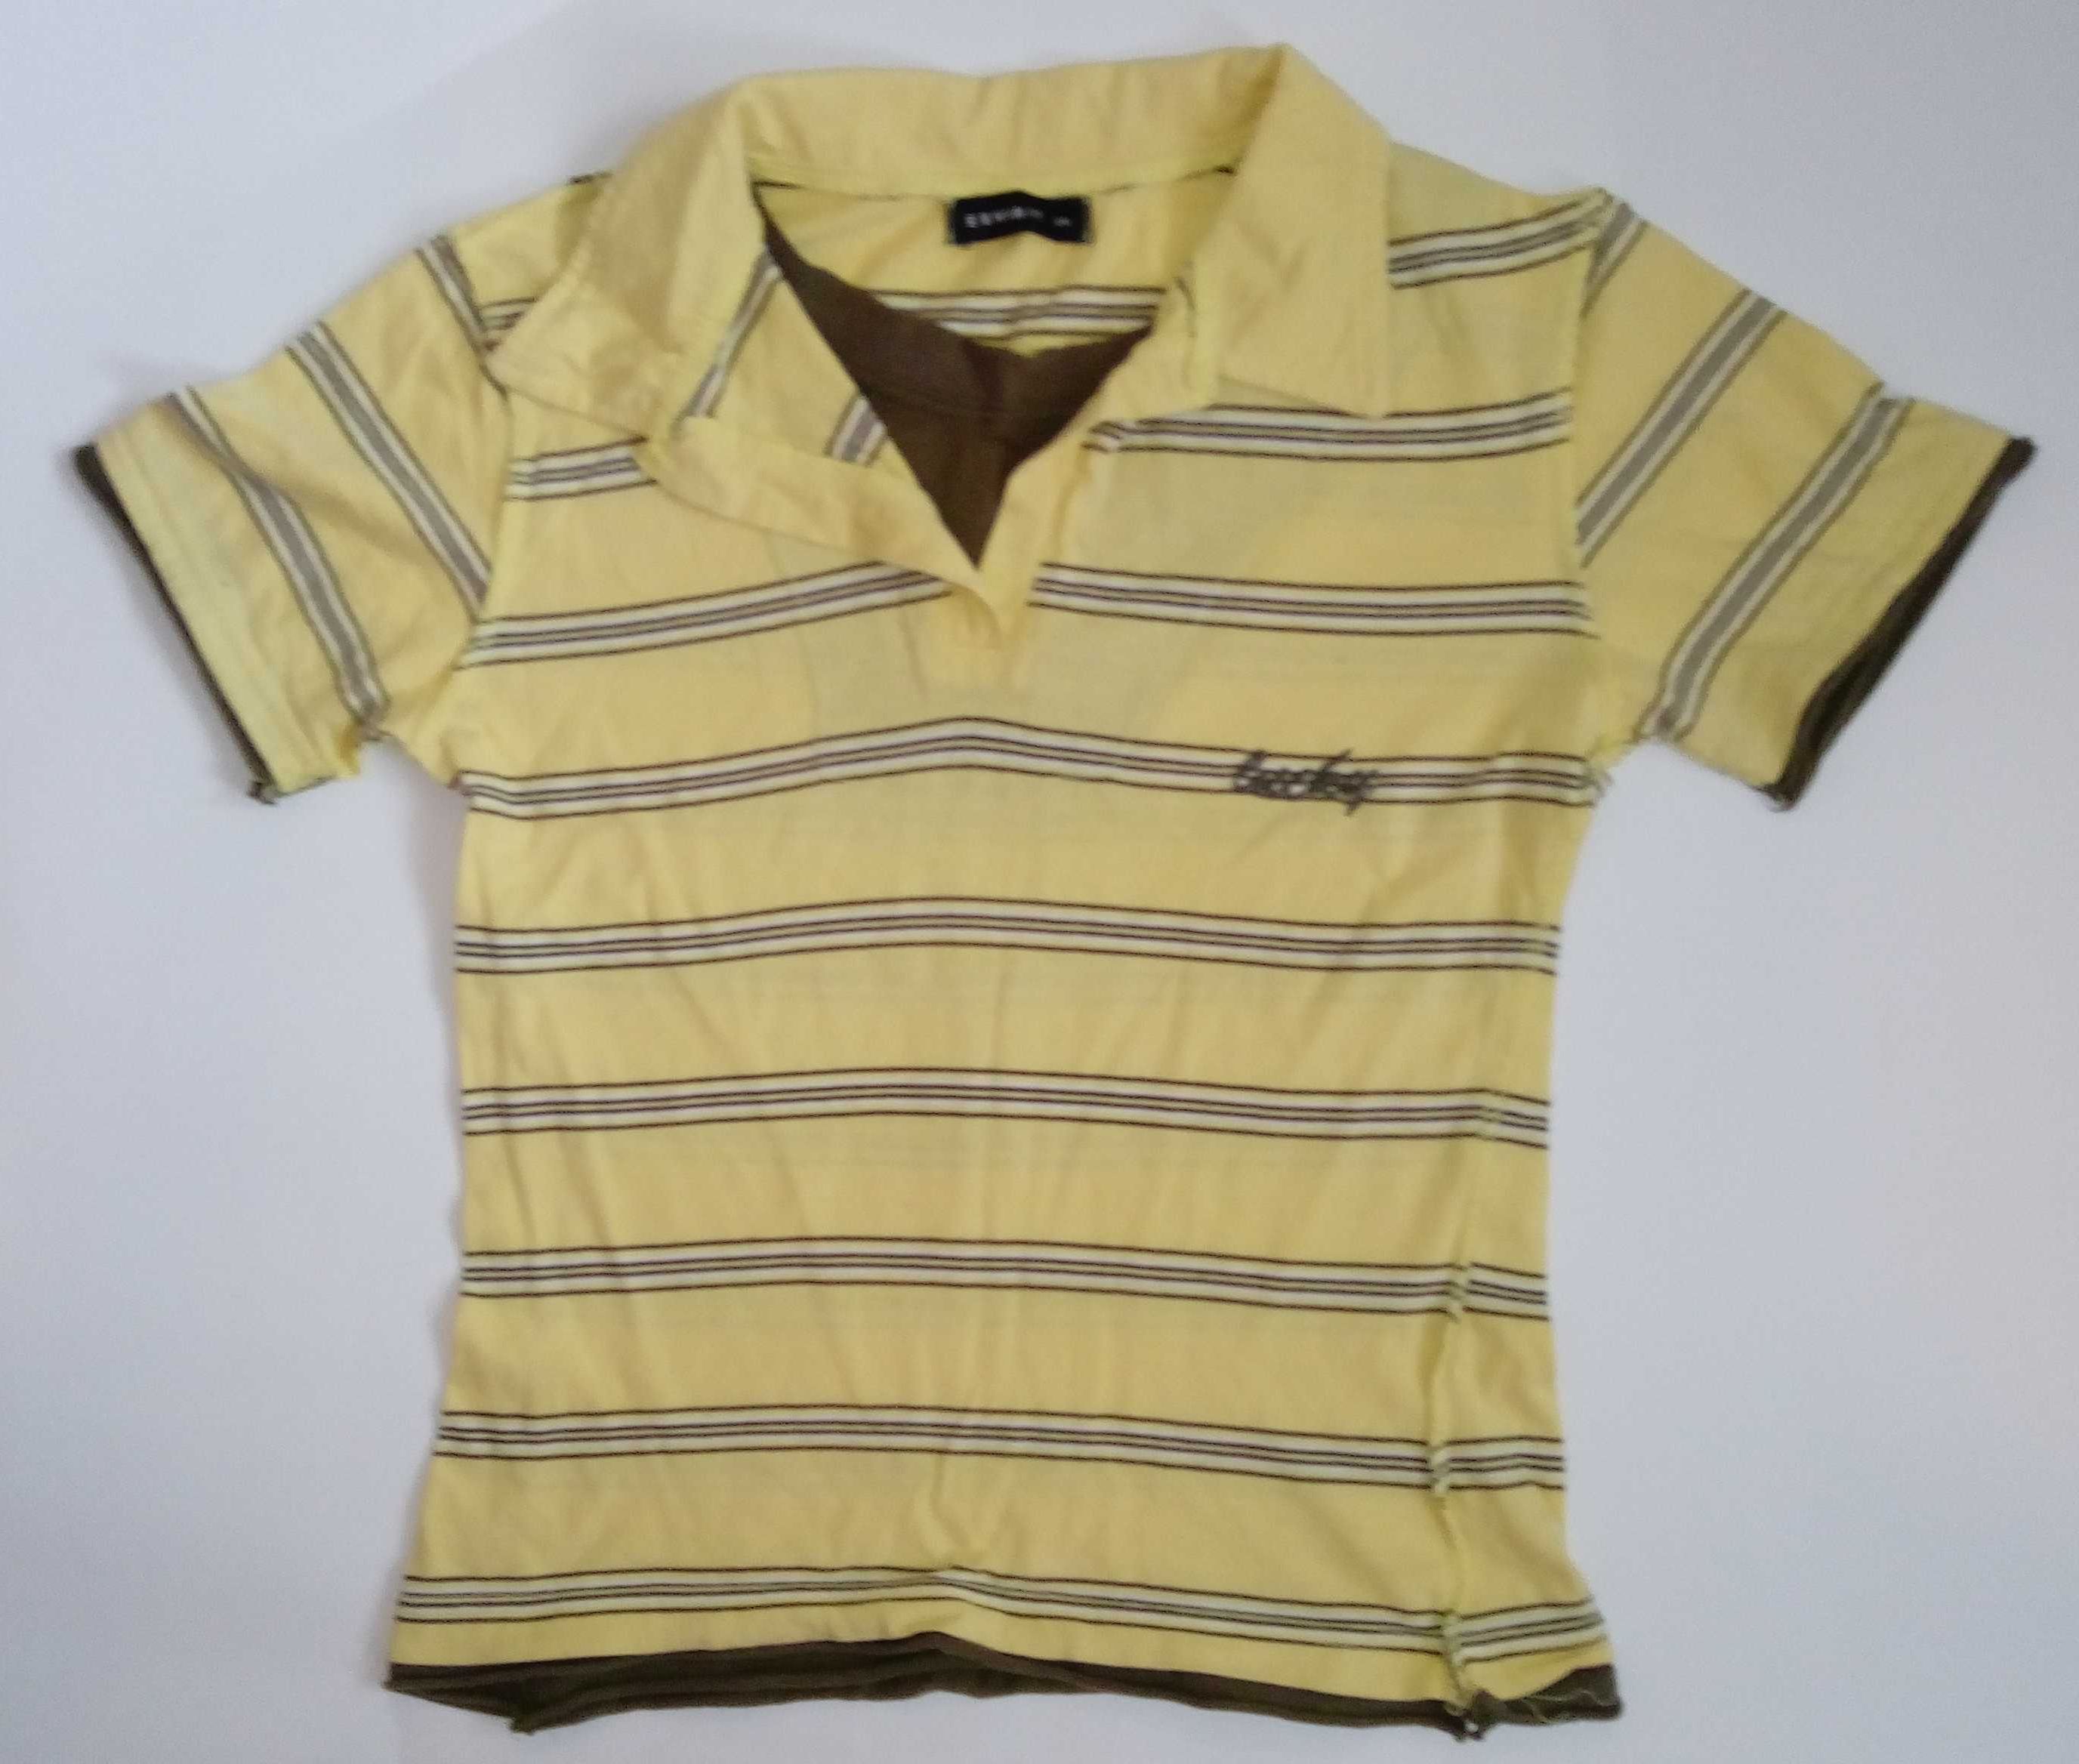 Exhibit żółta koszulka Polo r.S/M bawełna paski Vintage bluzka